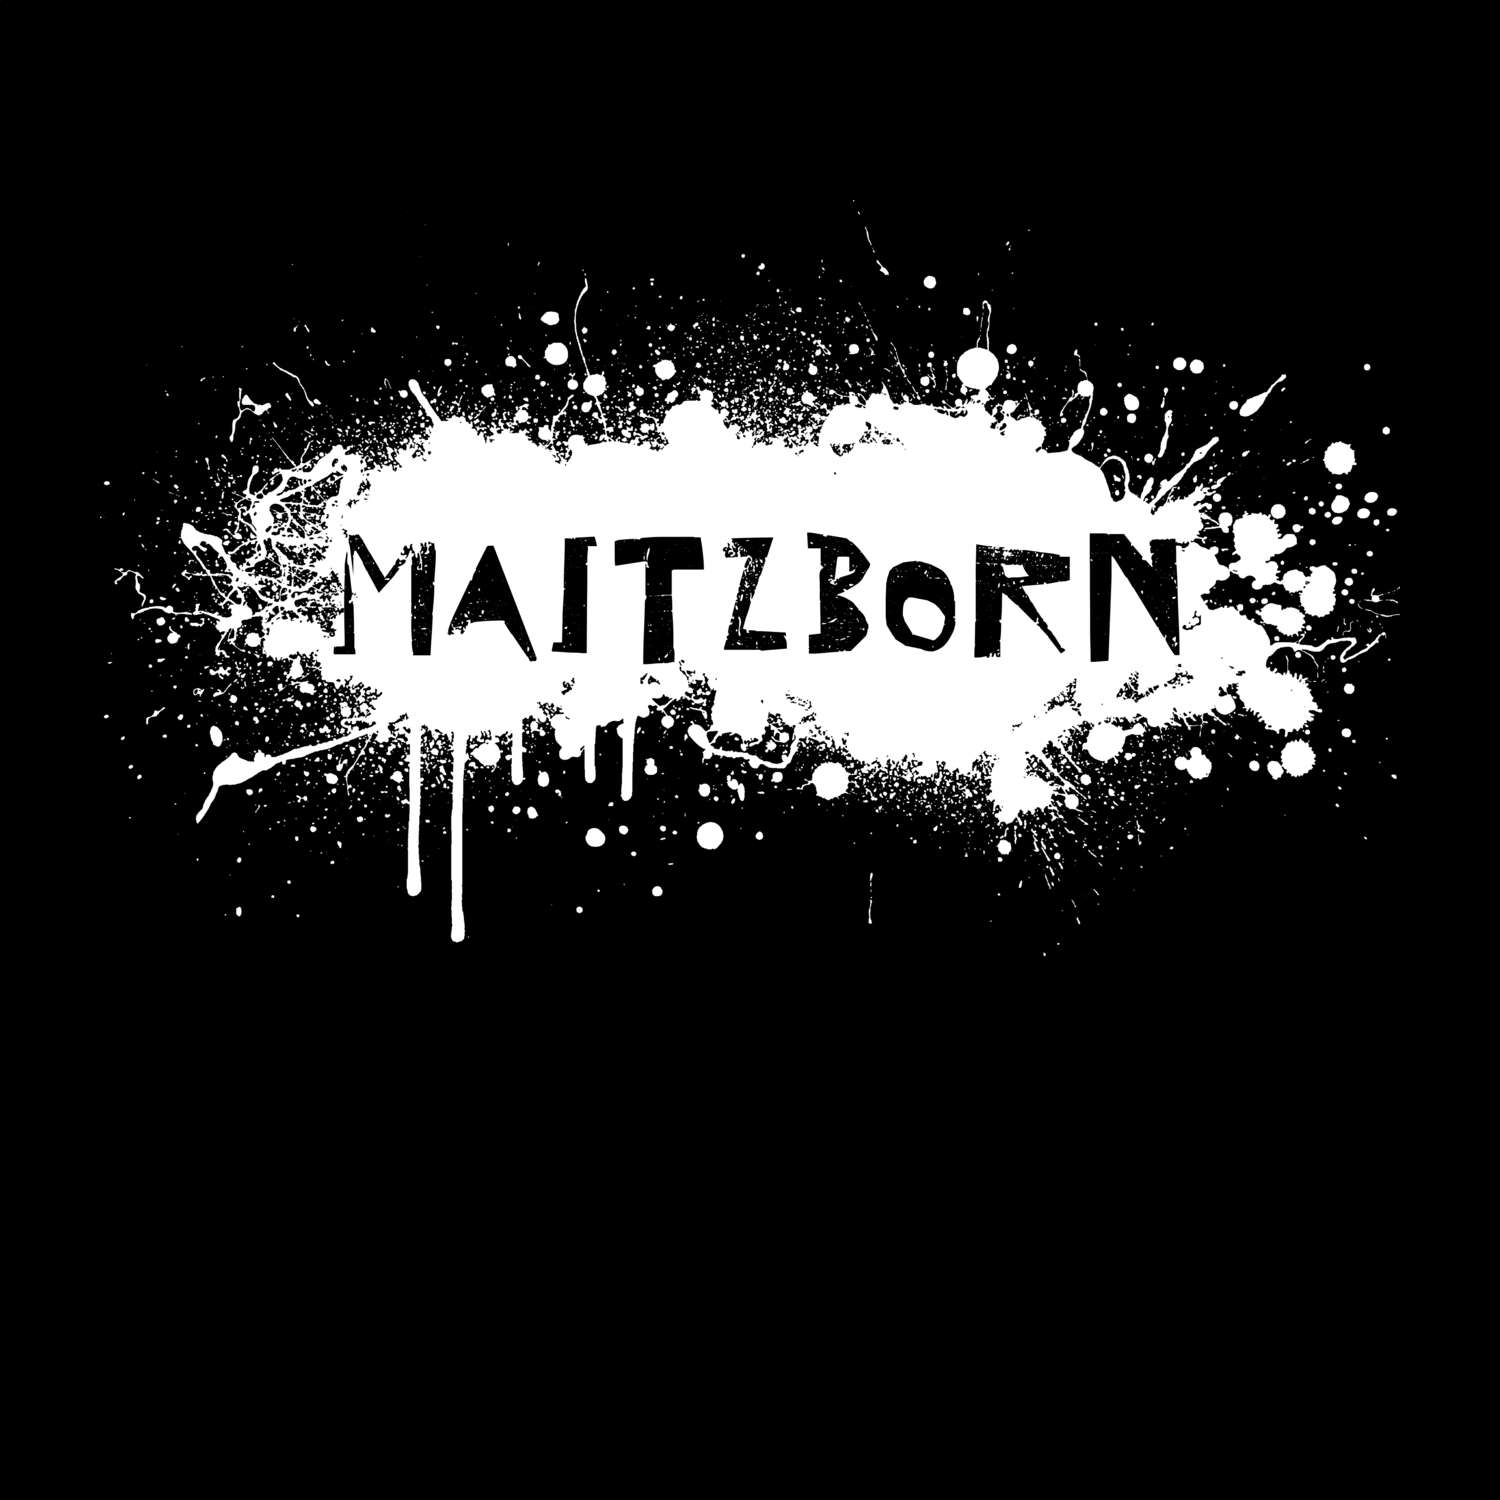 Maitzborn T-Shirt »Paint Splash Punk«